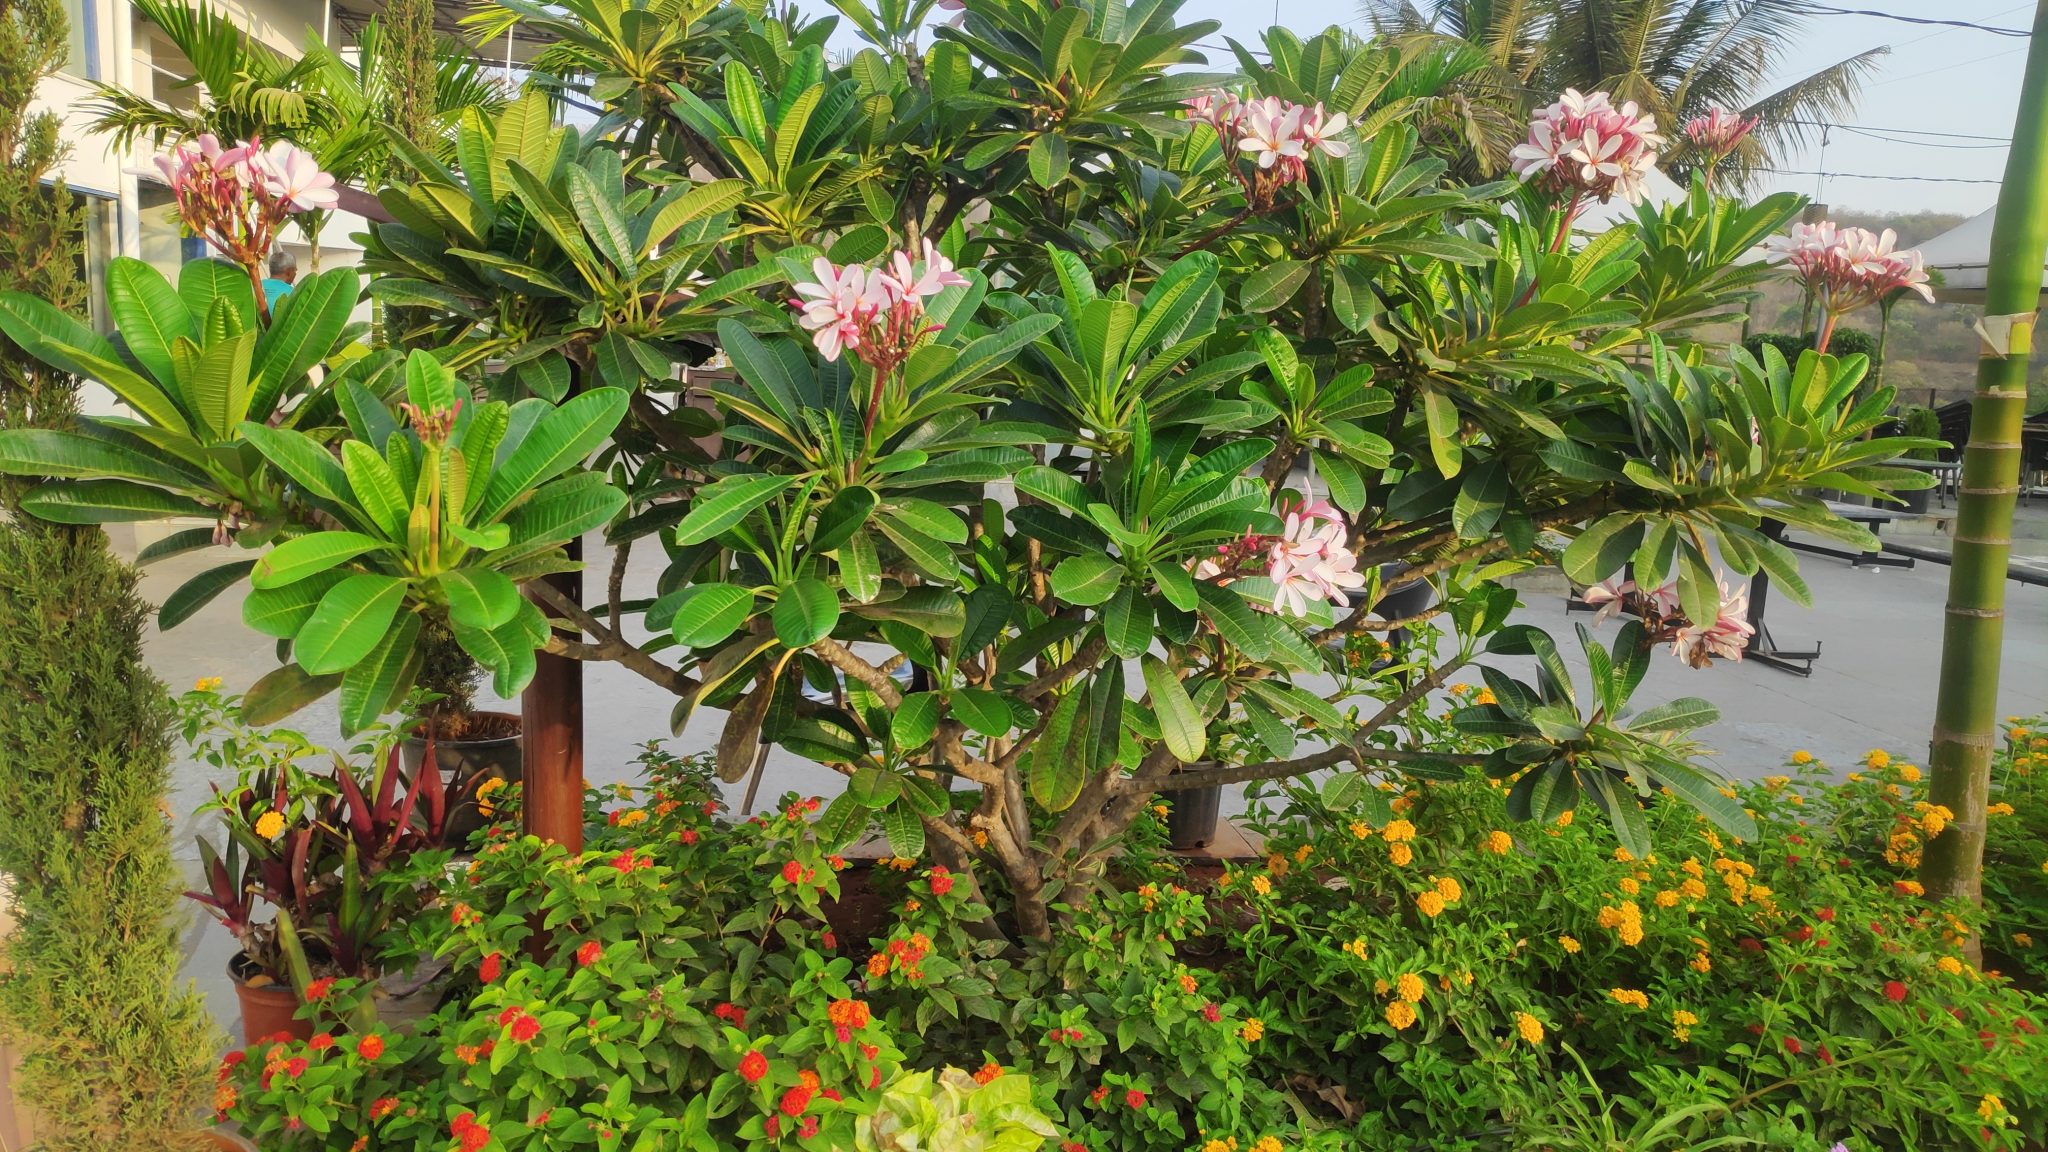 Chafa tree and flowers